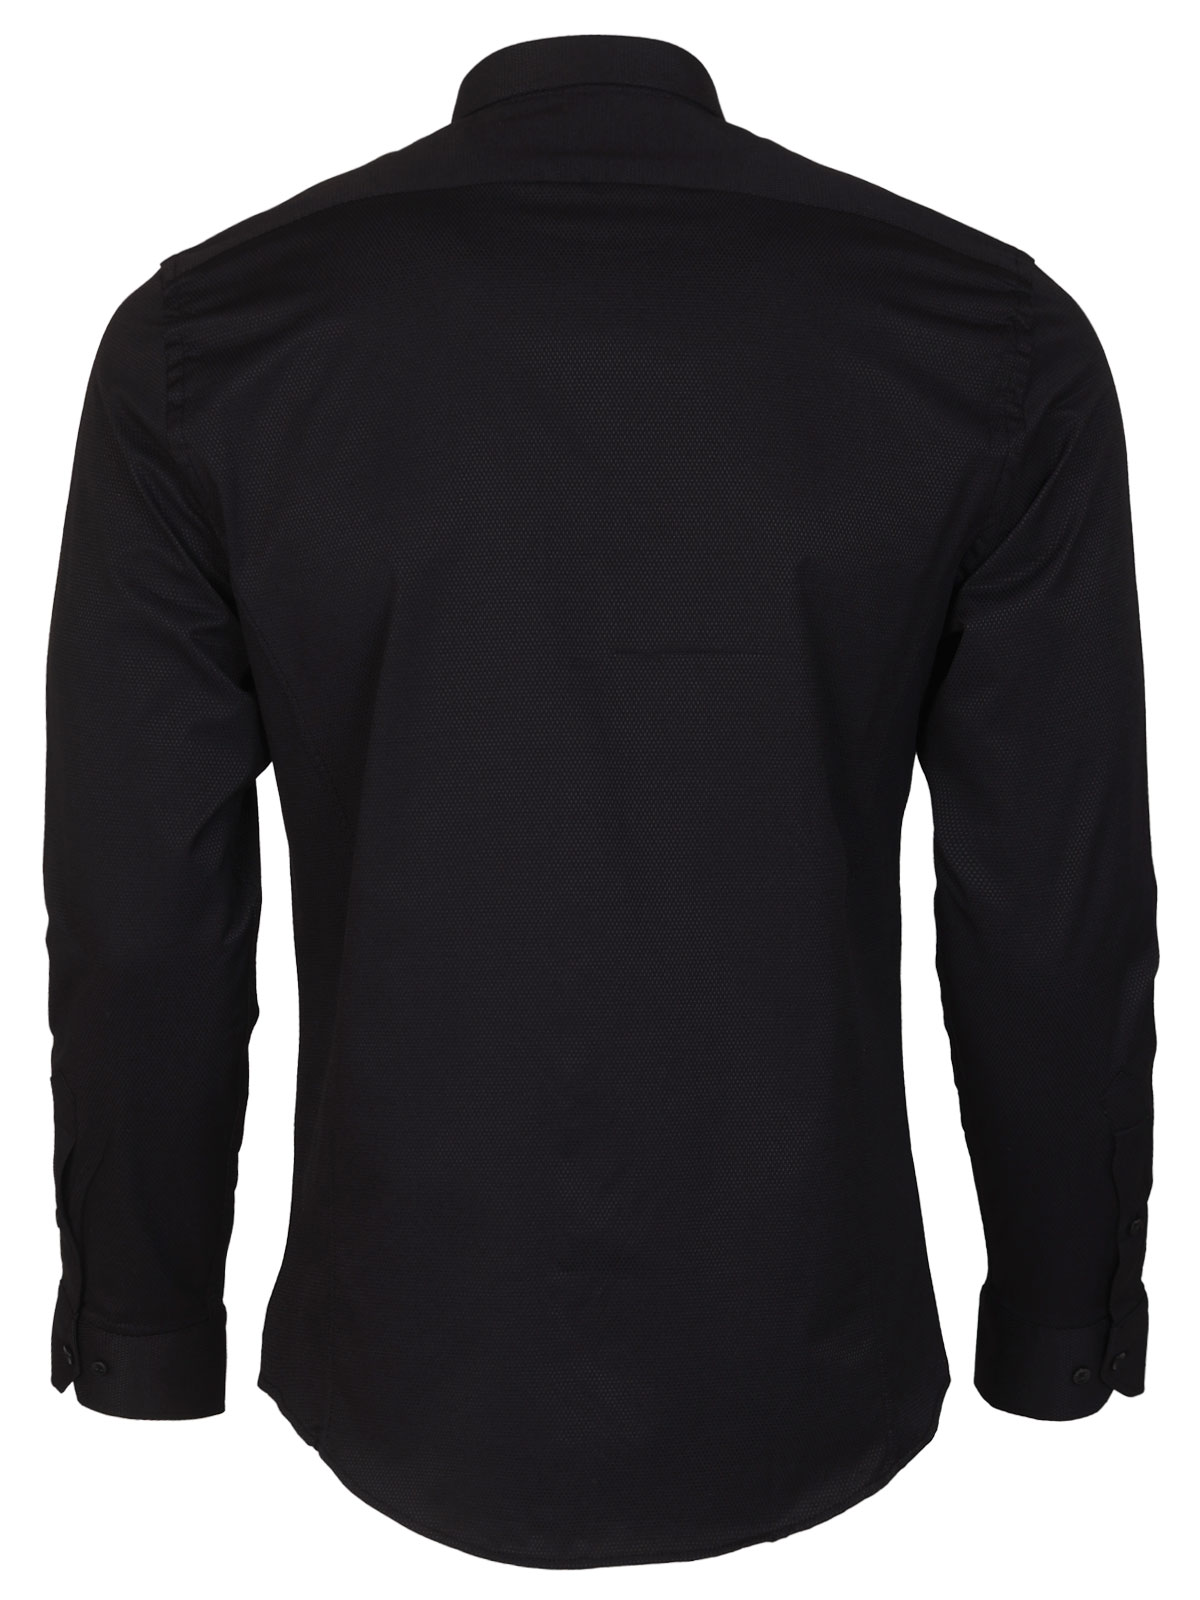 Mens shirt in black color - 21609 € 48.37 img2